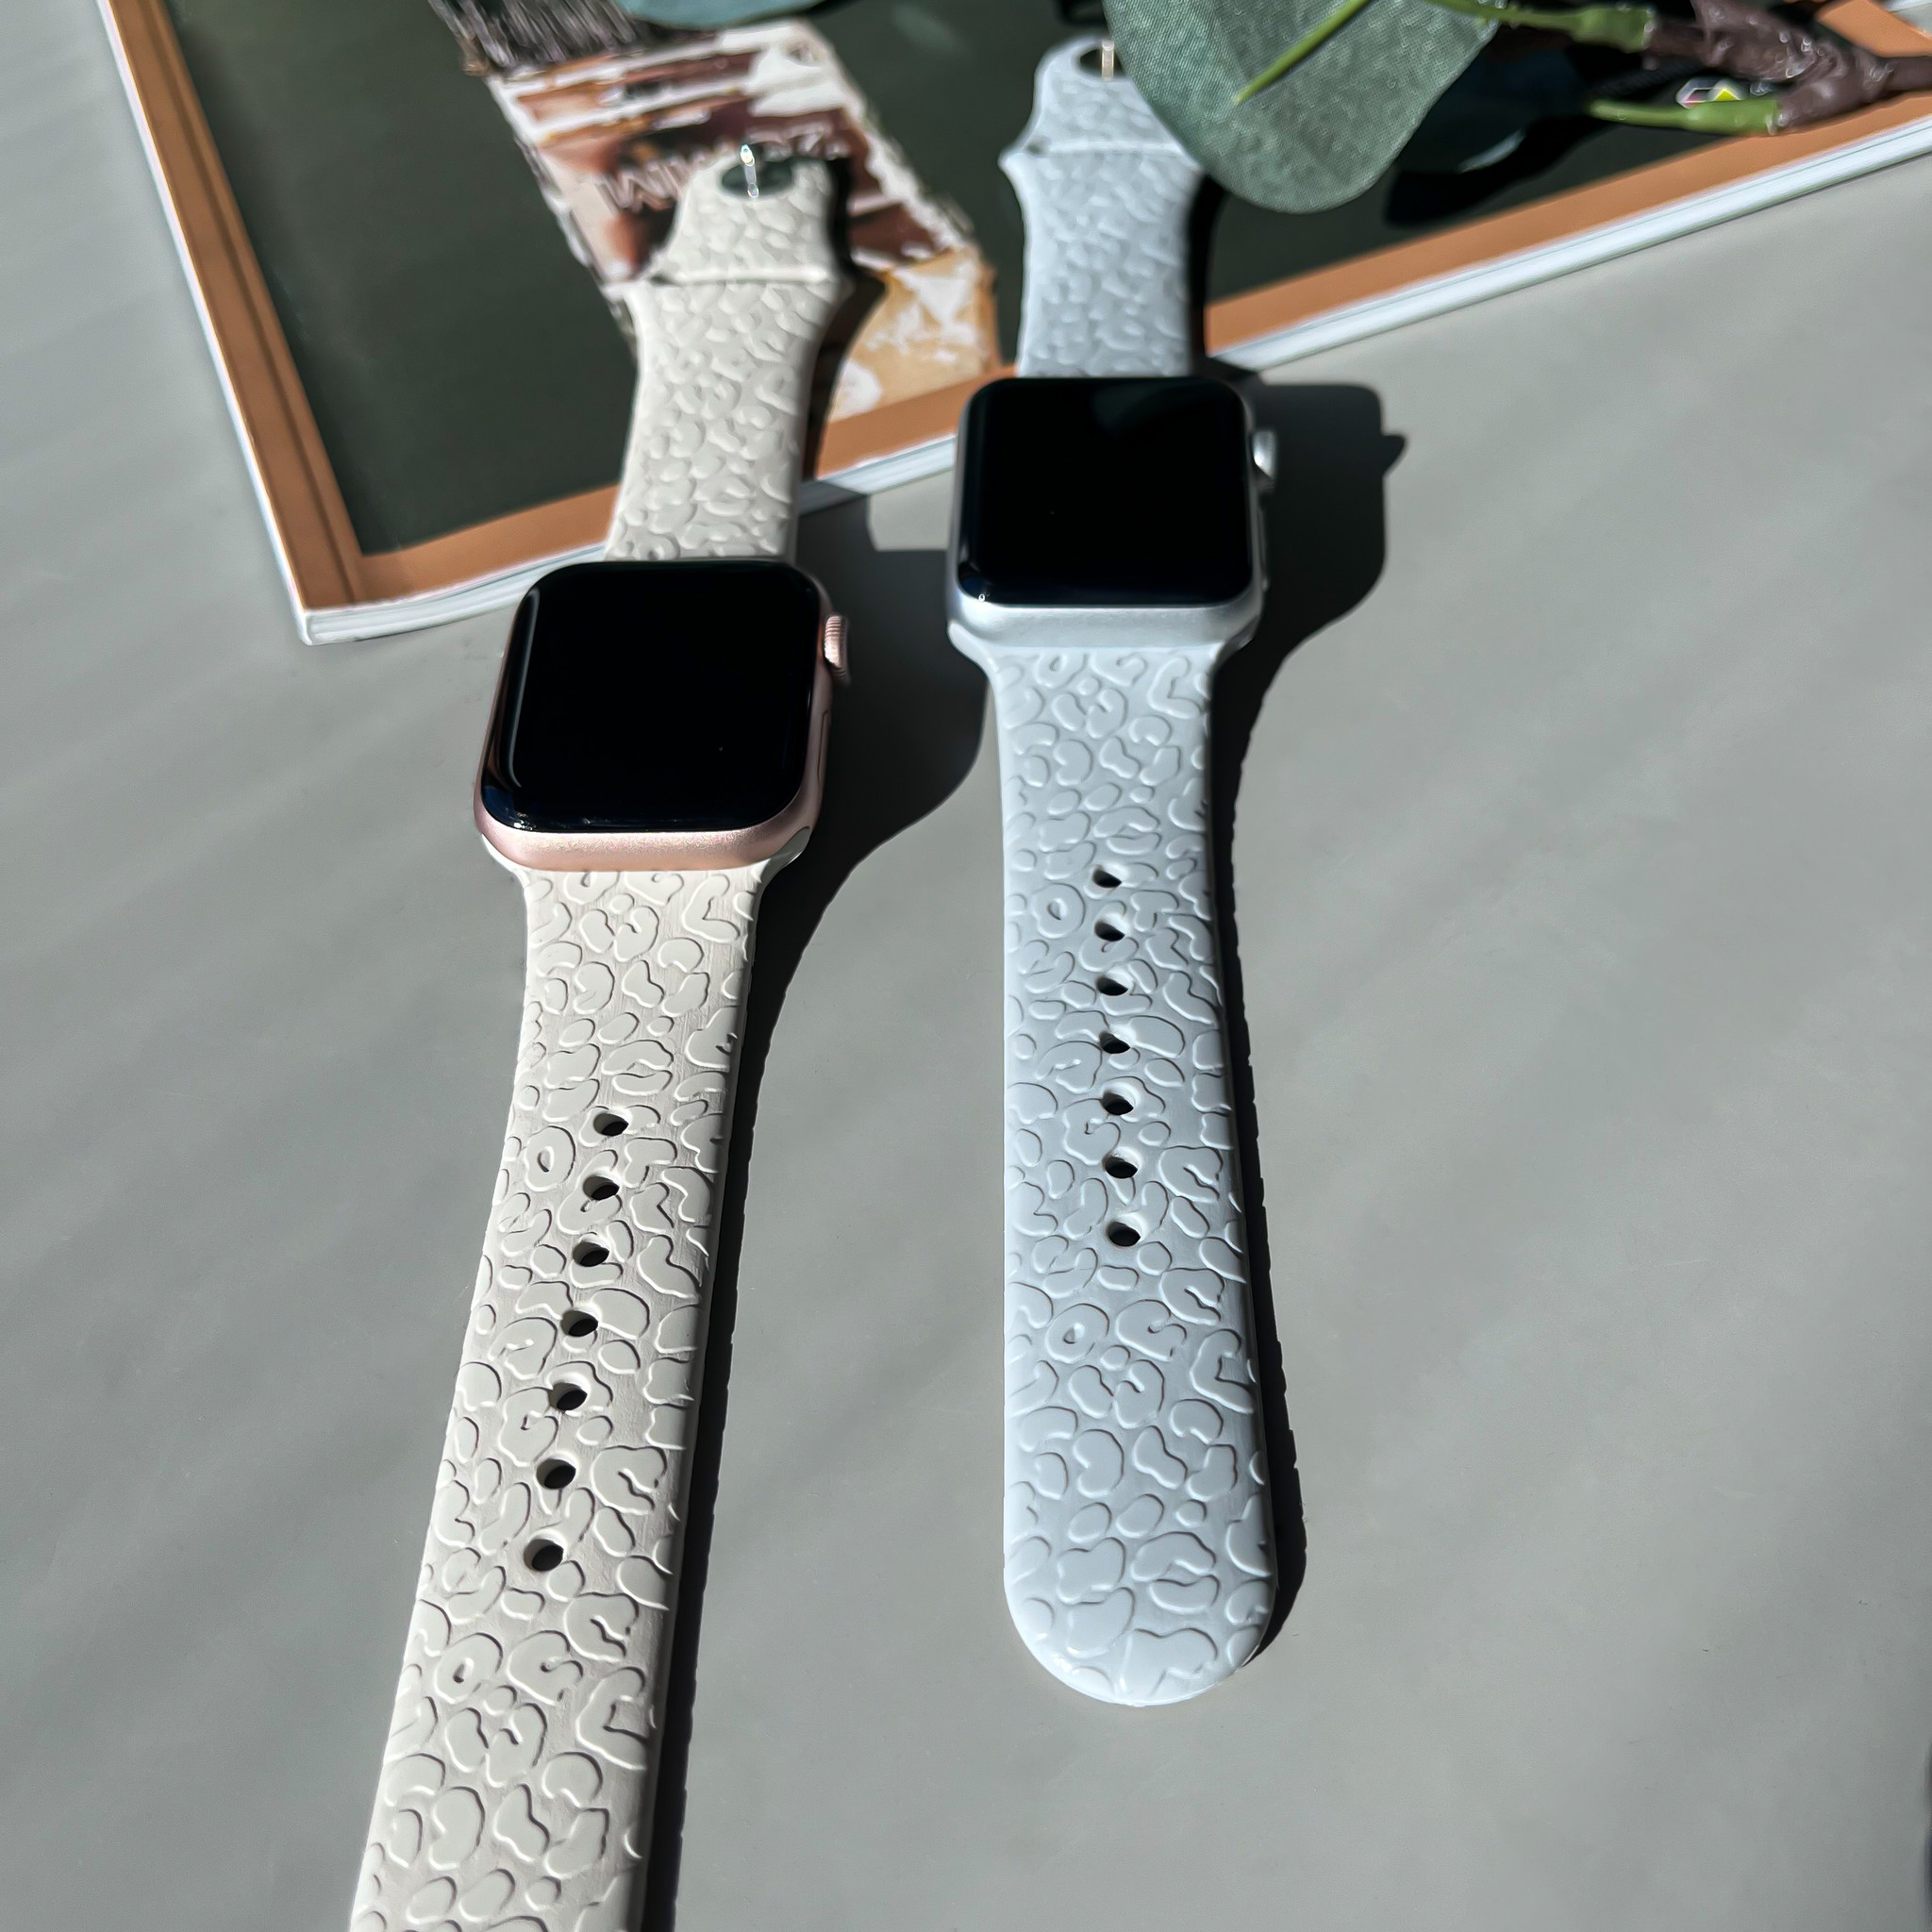 Cinturino sport con stampa per Apple Watch - leopardo galassia